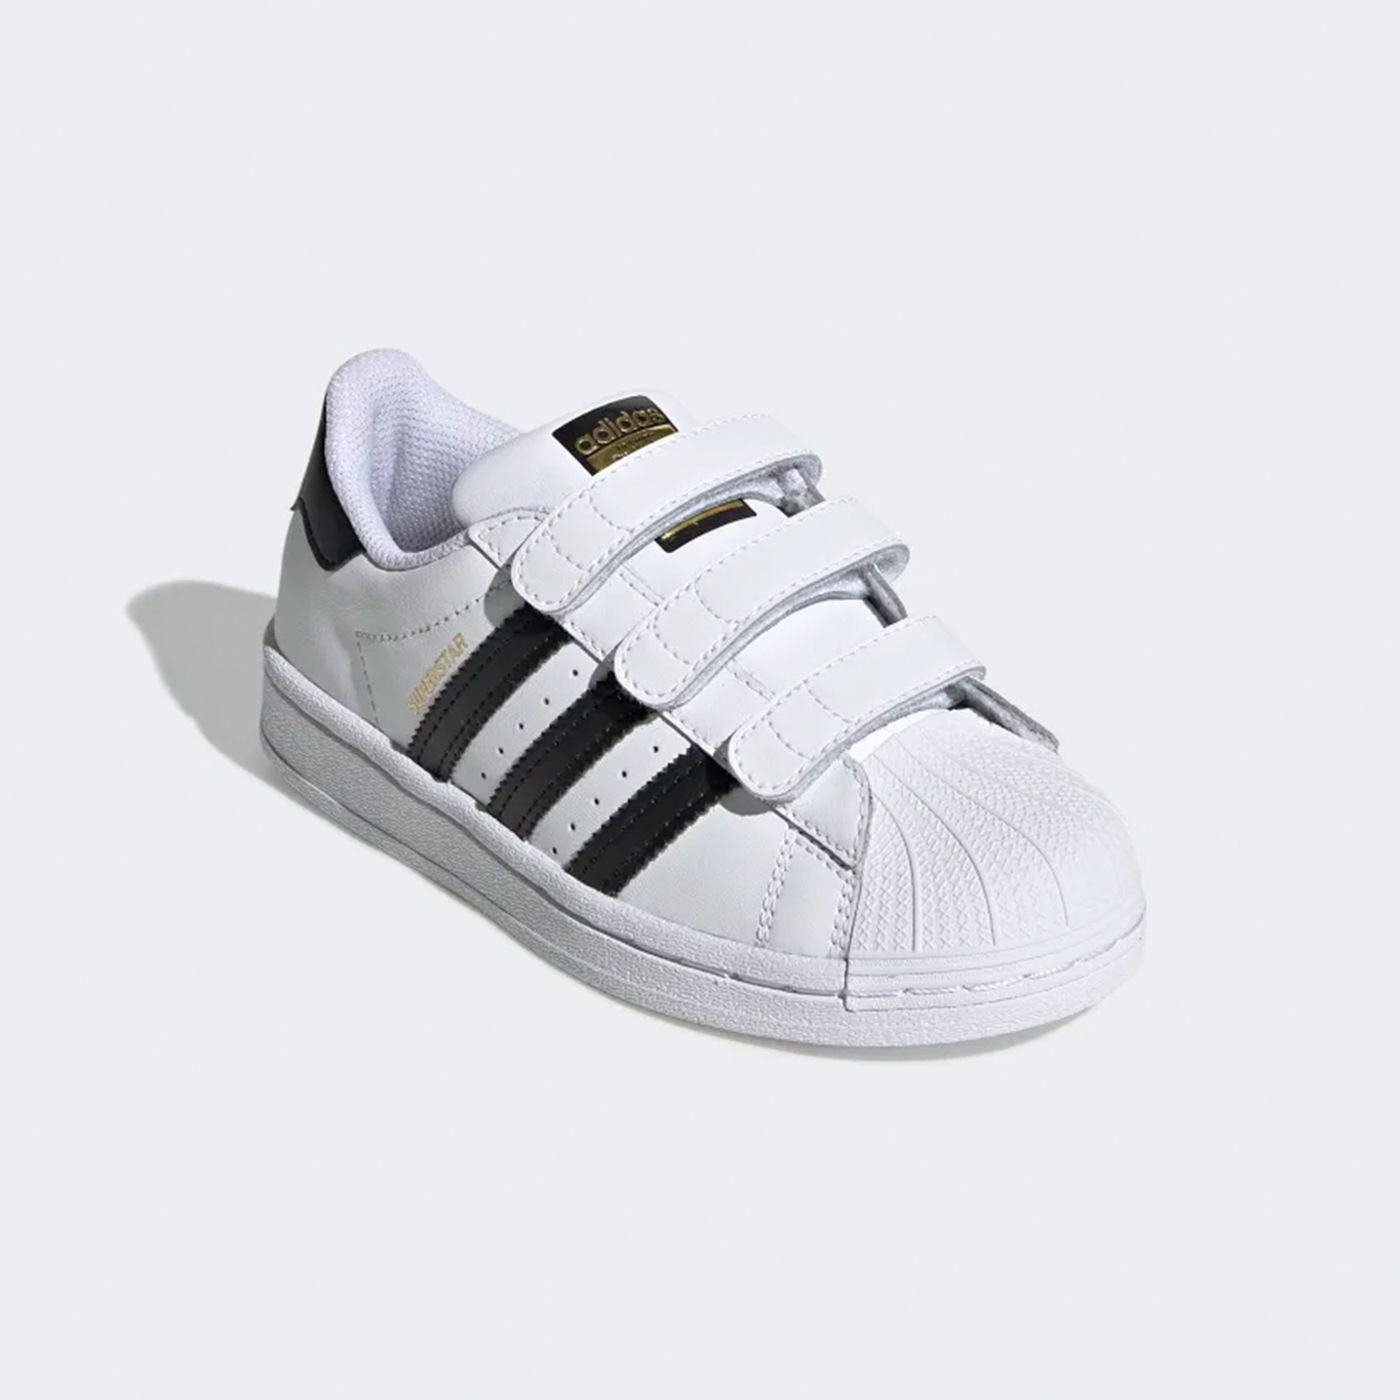 BZ0418 - Shoes - Adidas